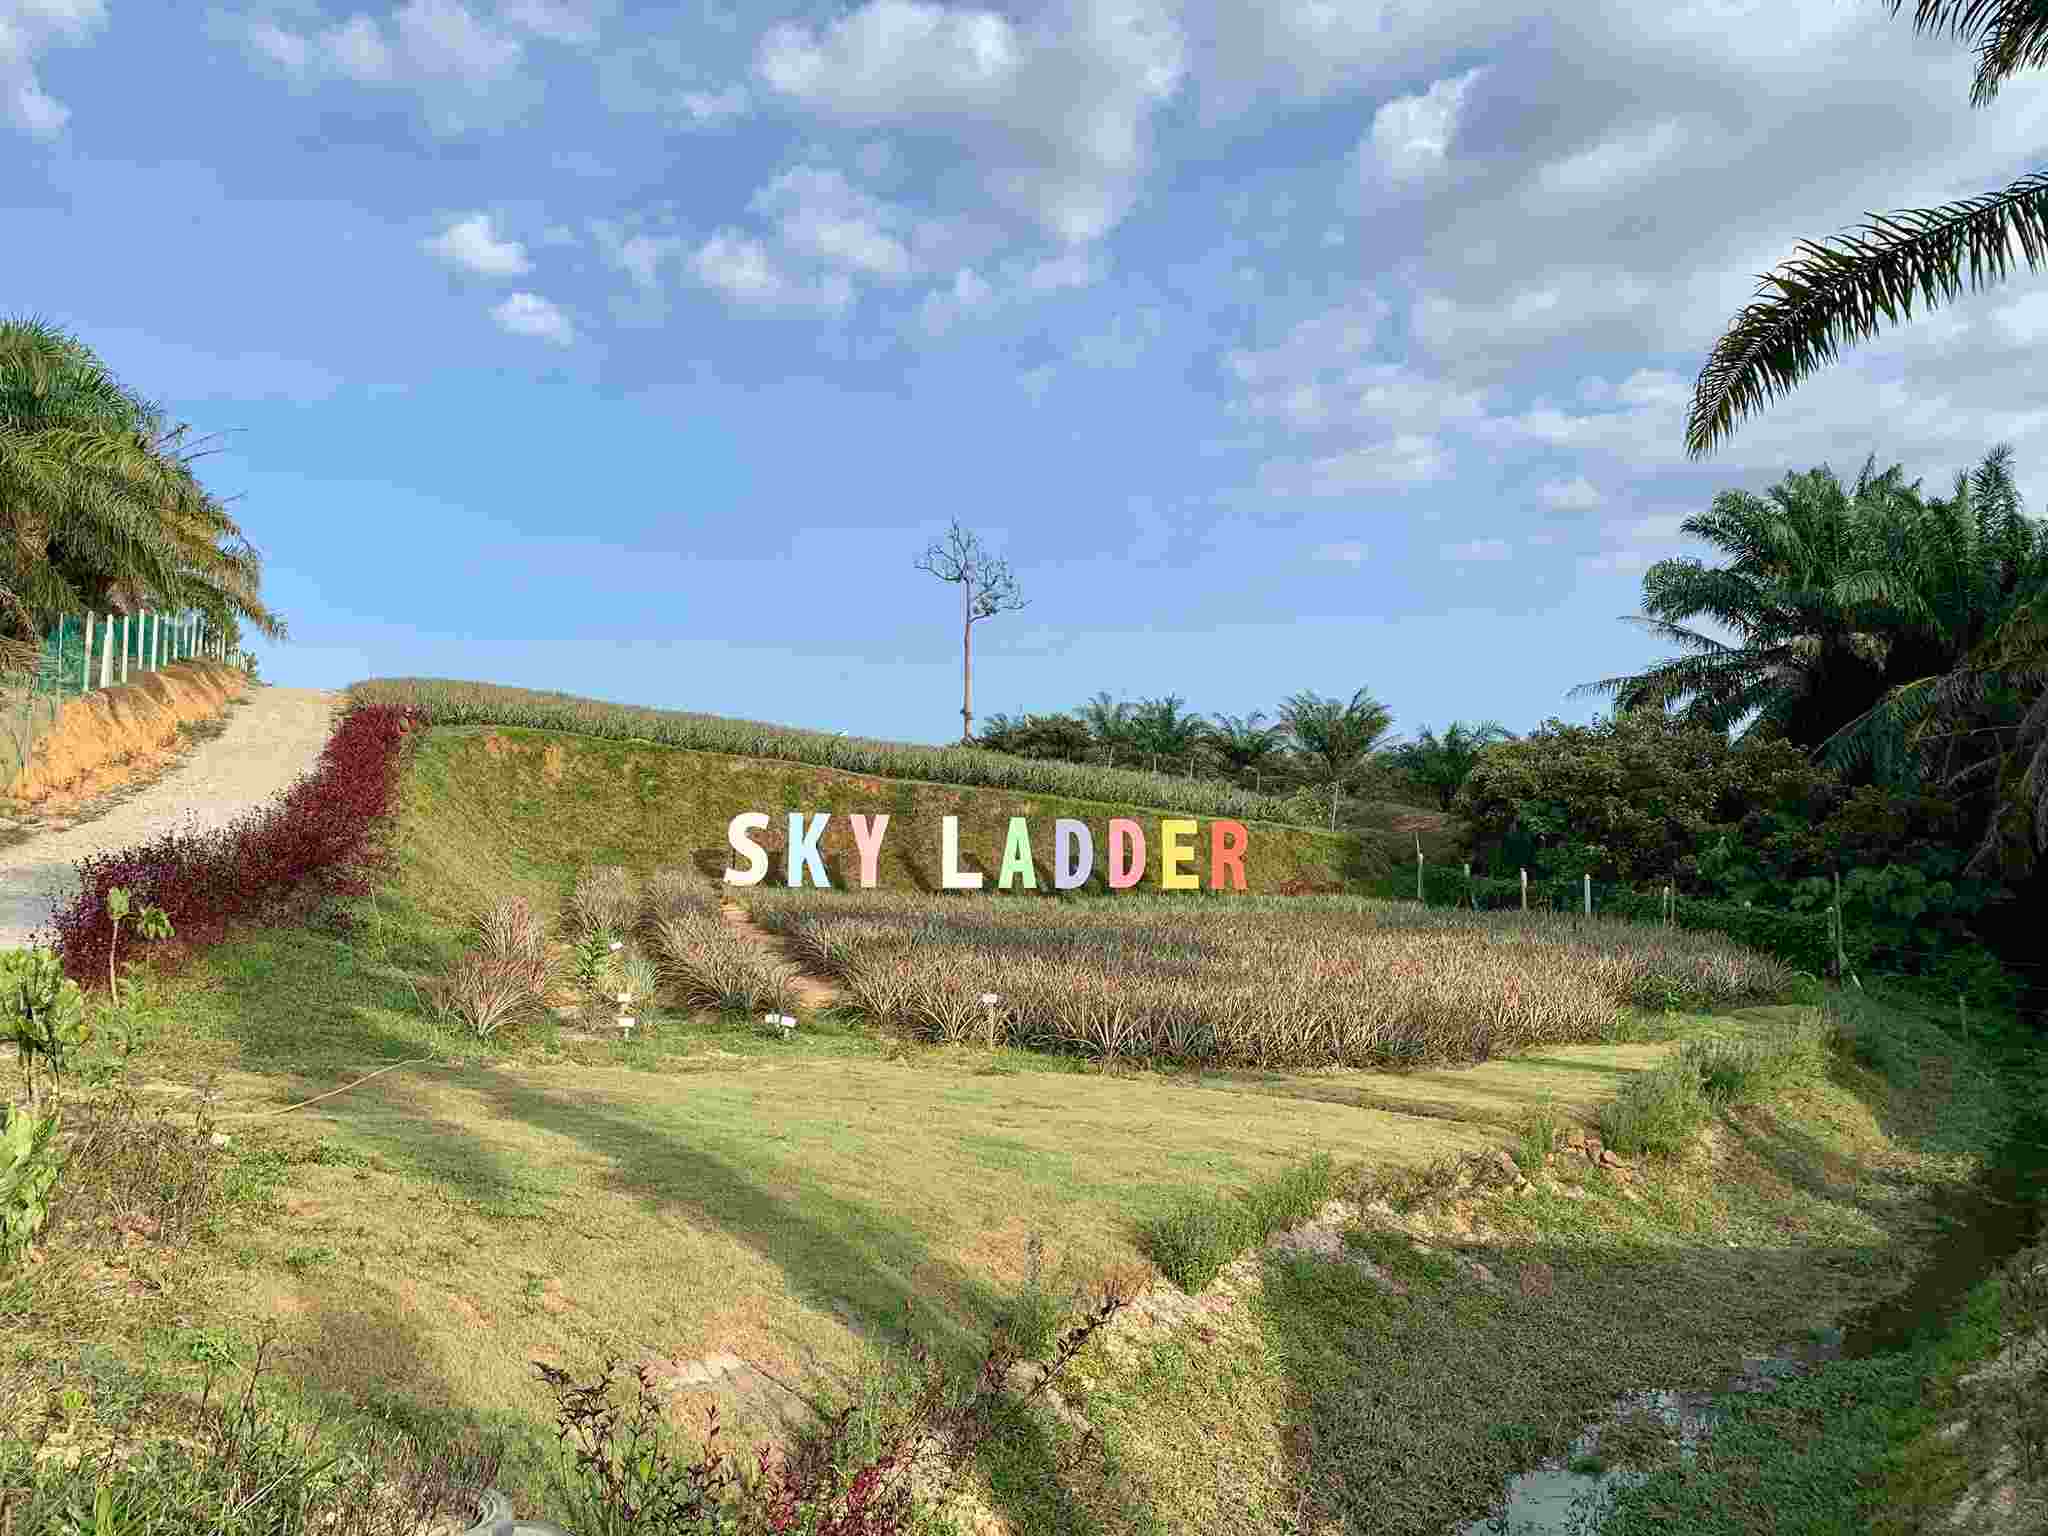 Sky Ladder Pineapple Farm
